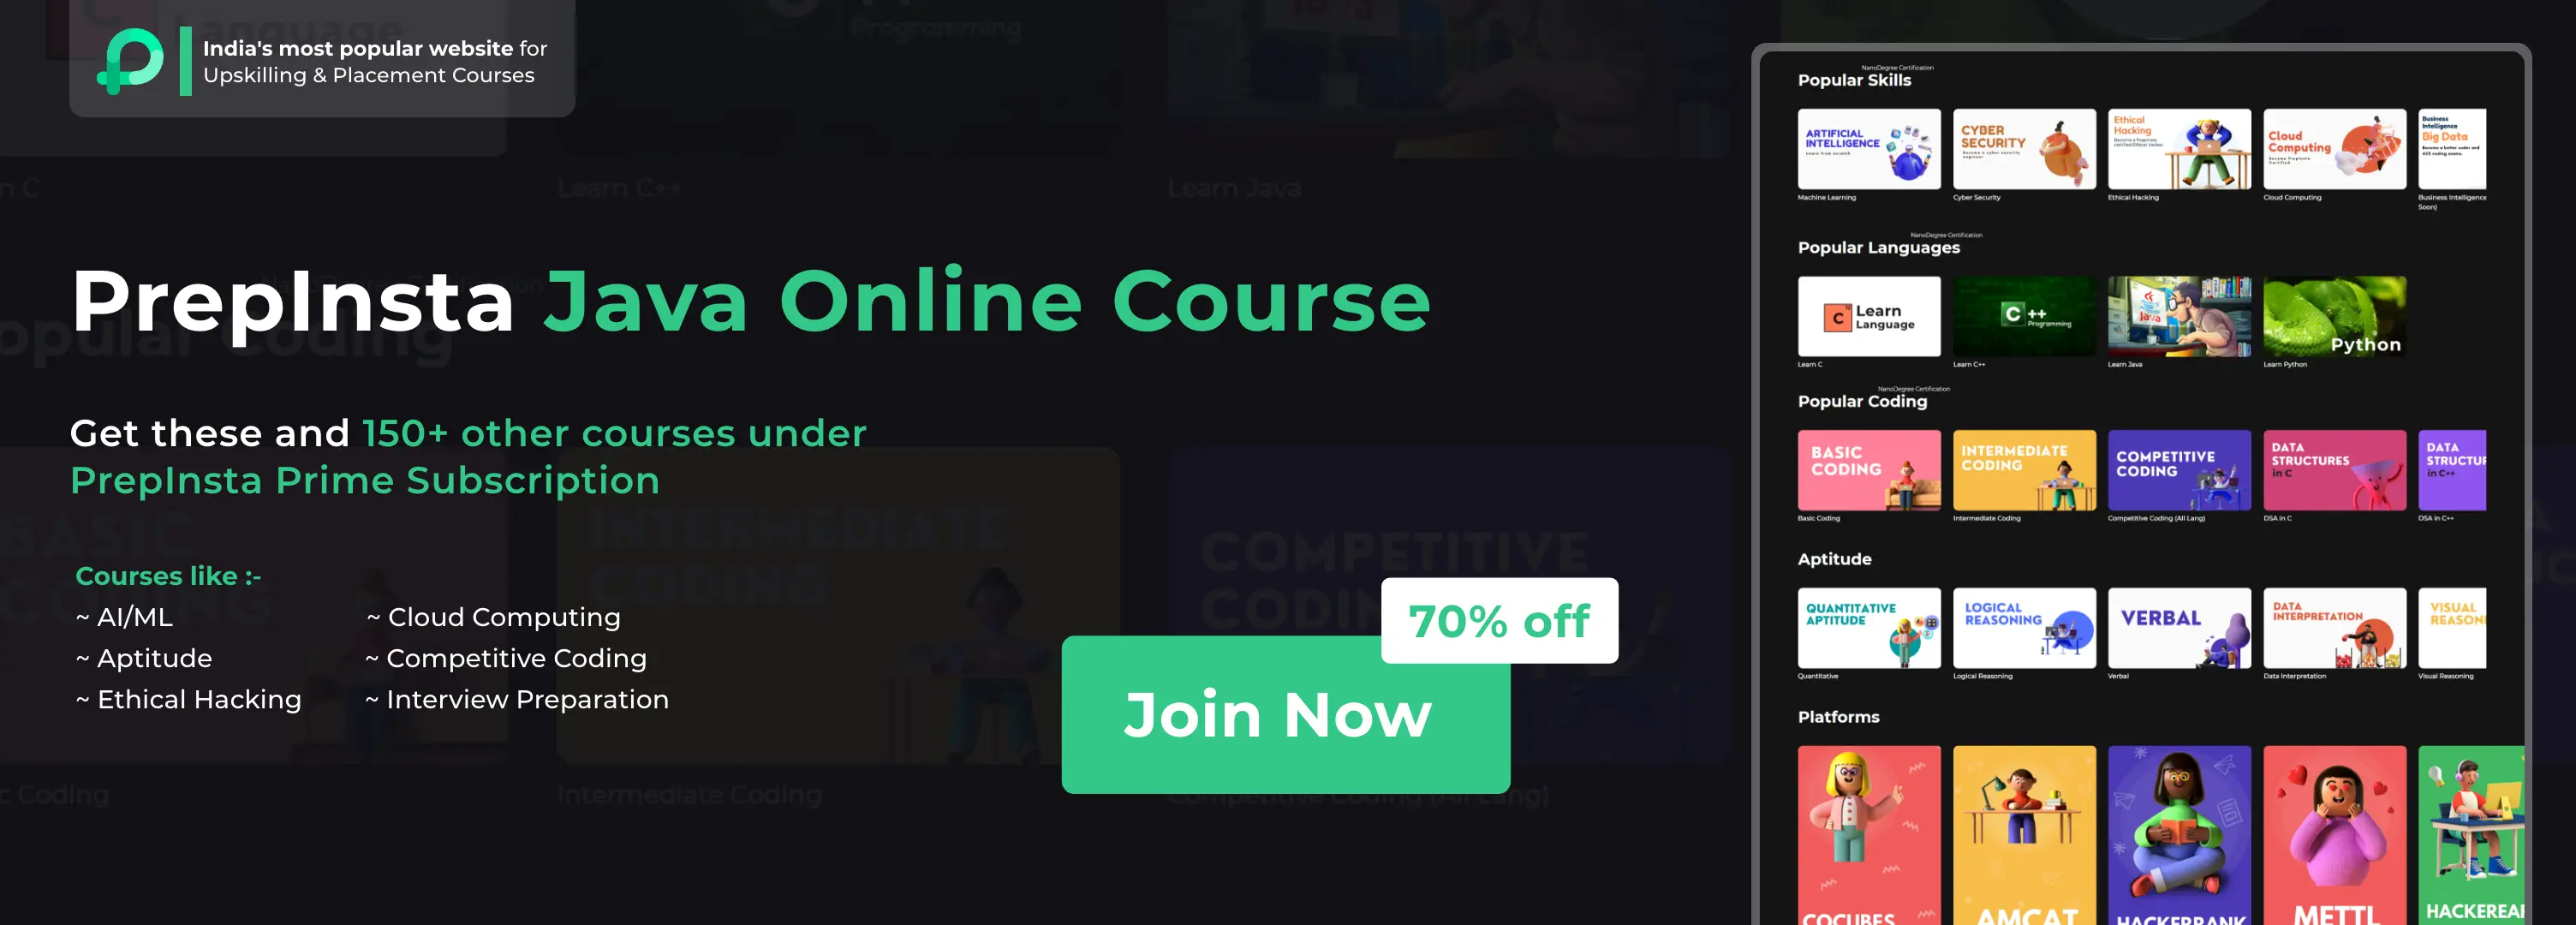 Java Online Course Banner